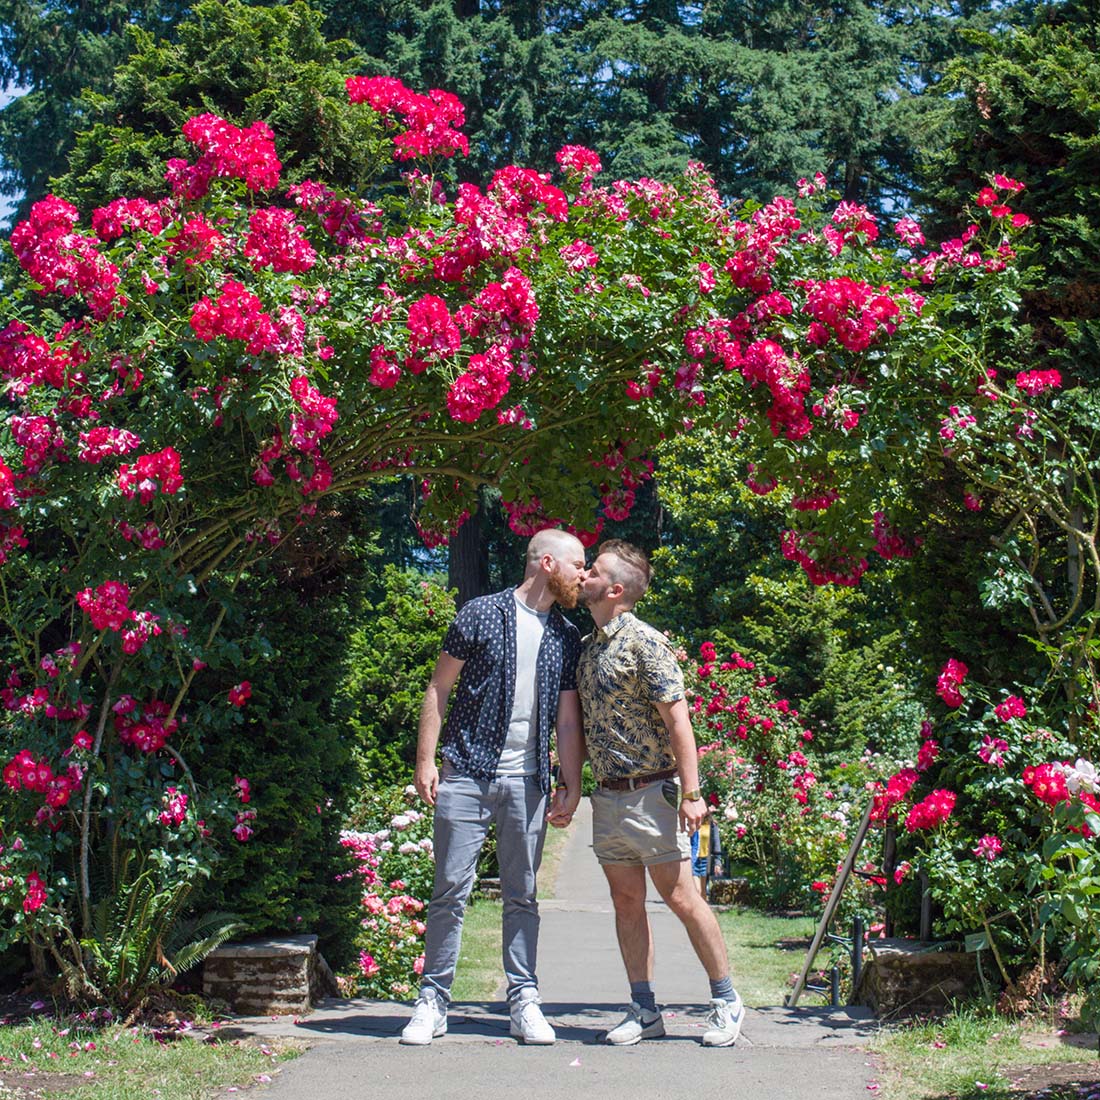 A Gay Kiss Photo at the International Rose Test Garden © Coupleofmen.com